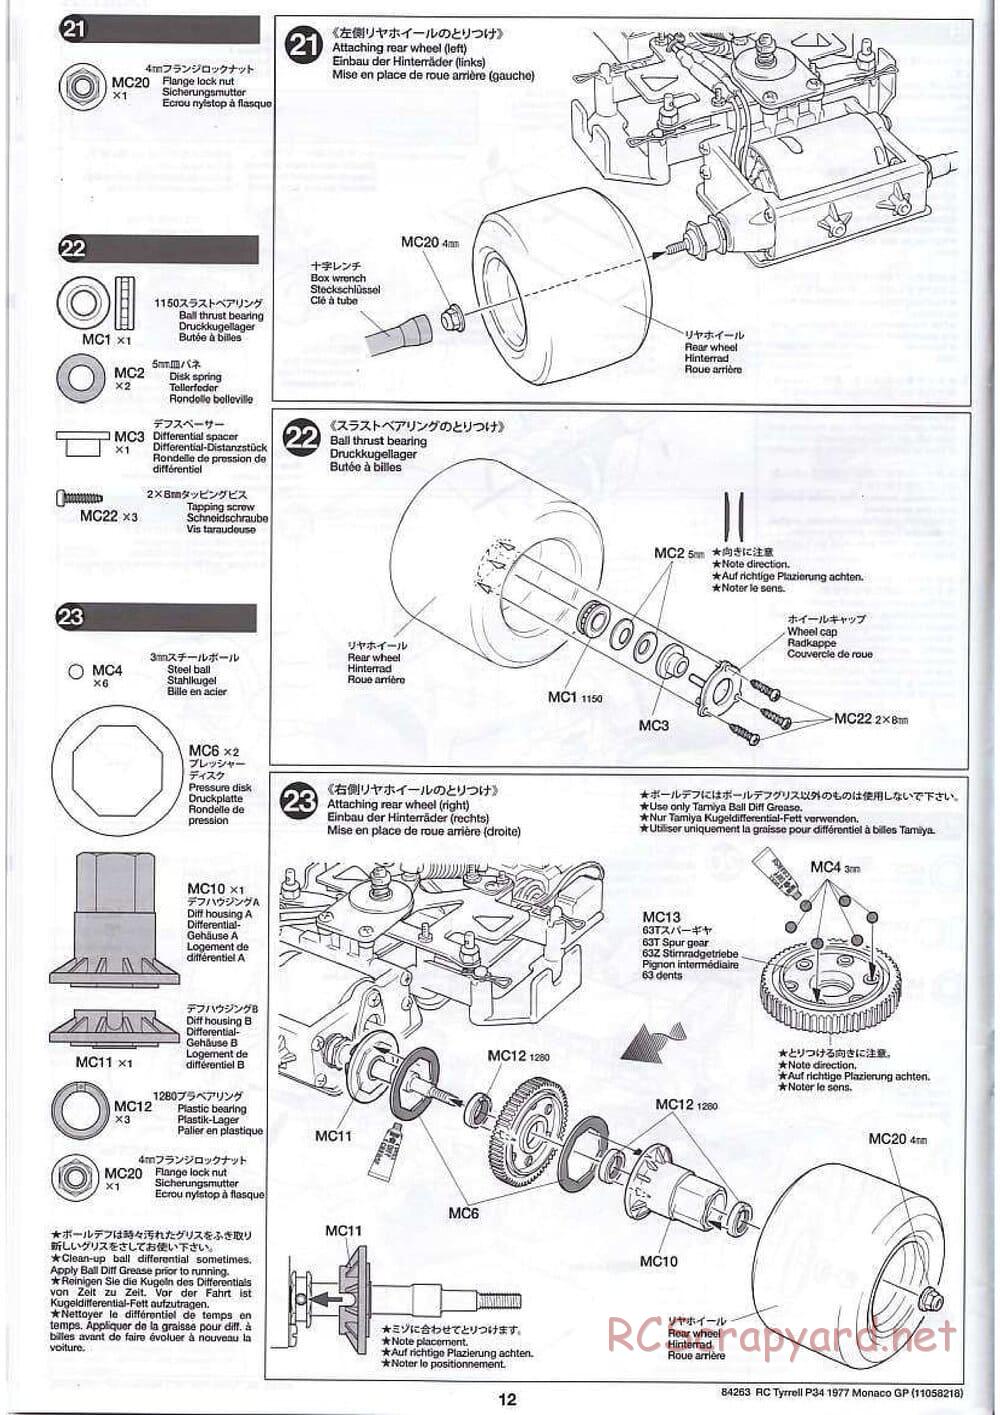 Tamiya - Tyrrell P34 1977 Monaco GP - F103-6W Chassis - Manual - Page 12